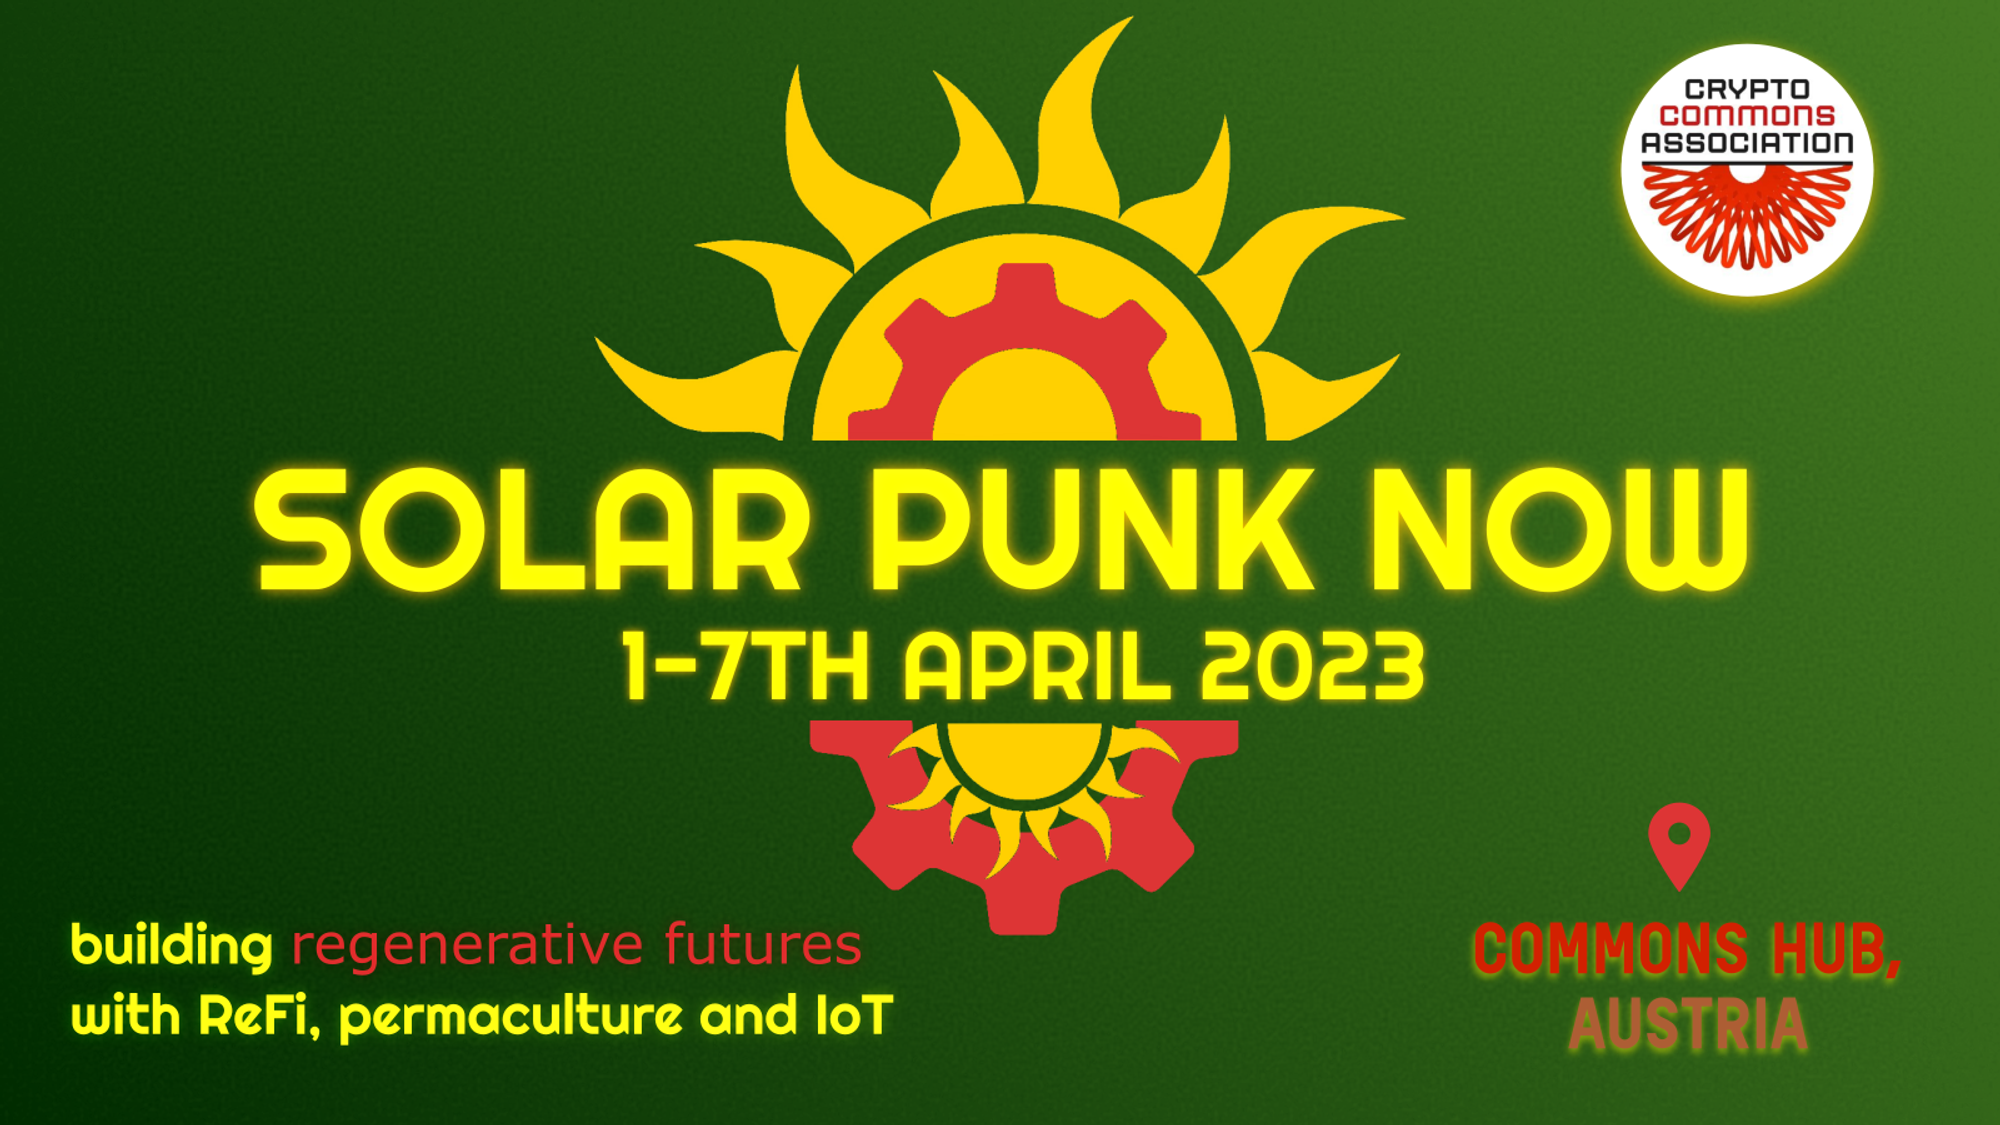 Burien Solar Punk Festival will highlight green technologies Aug. 27